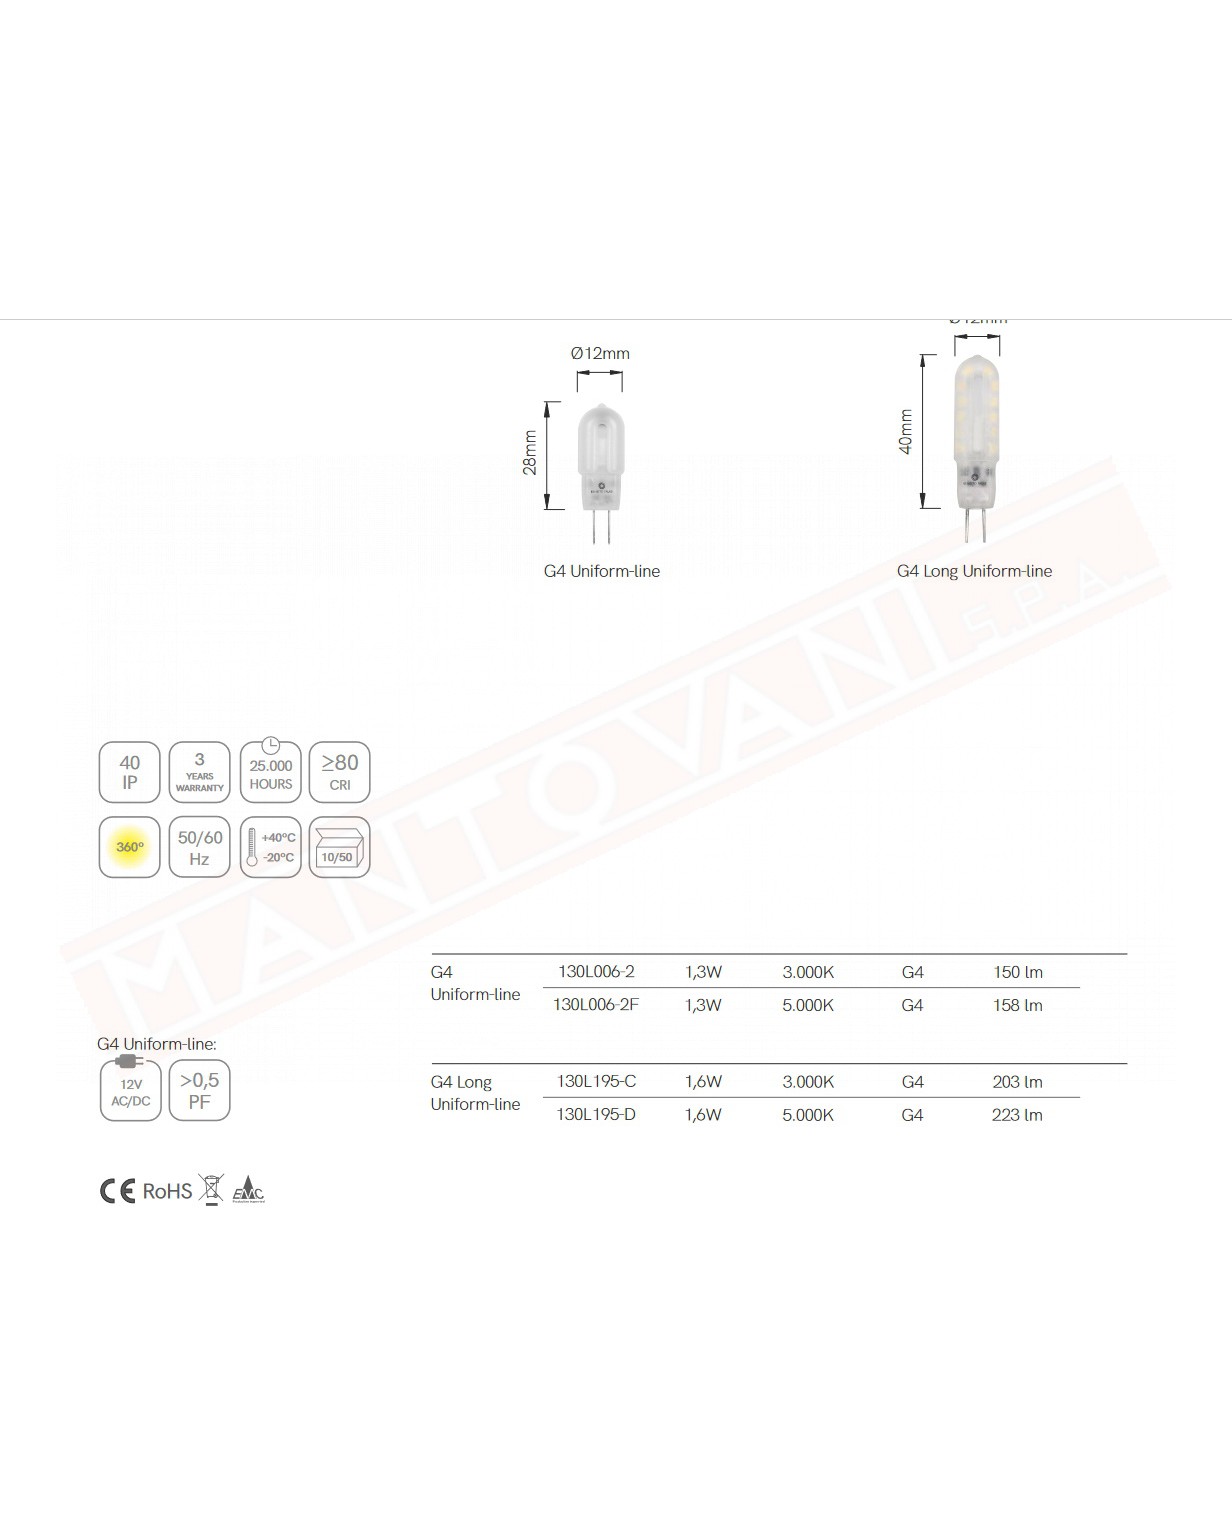 Beneito Faure lampadina bispina g4 1.3w 5000k 12 volts 12 X 28 mm 158 lumen classe energetica F